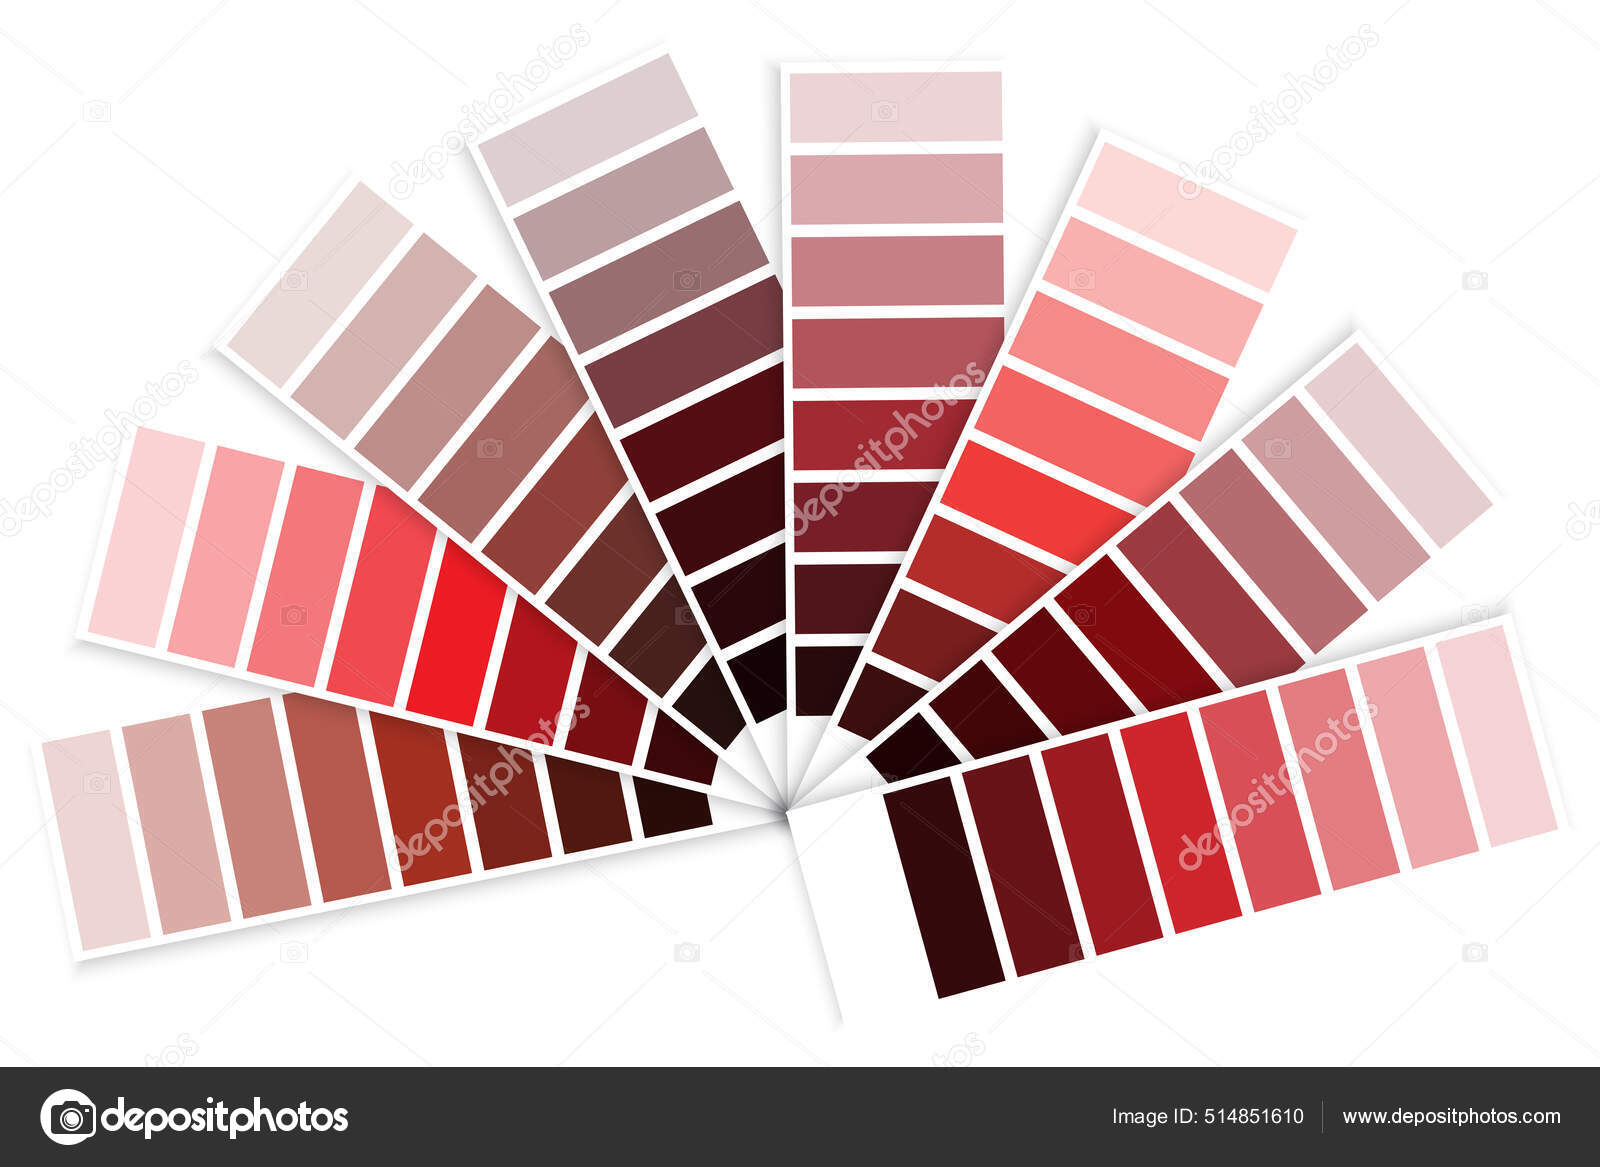 https://st.depositphotos.com/36530194/51485/v/1600/depositphotos_514851610-stock-illustration-color-palette-scale-of-red.jpg